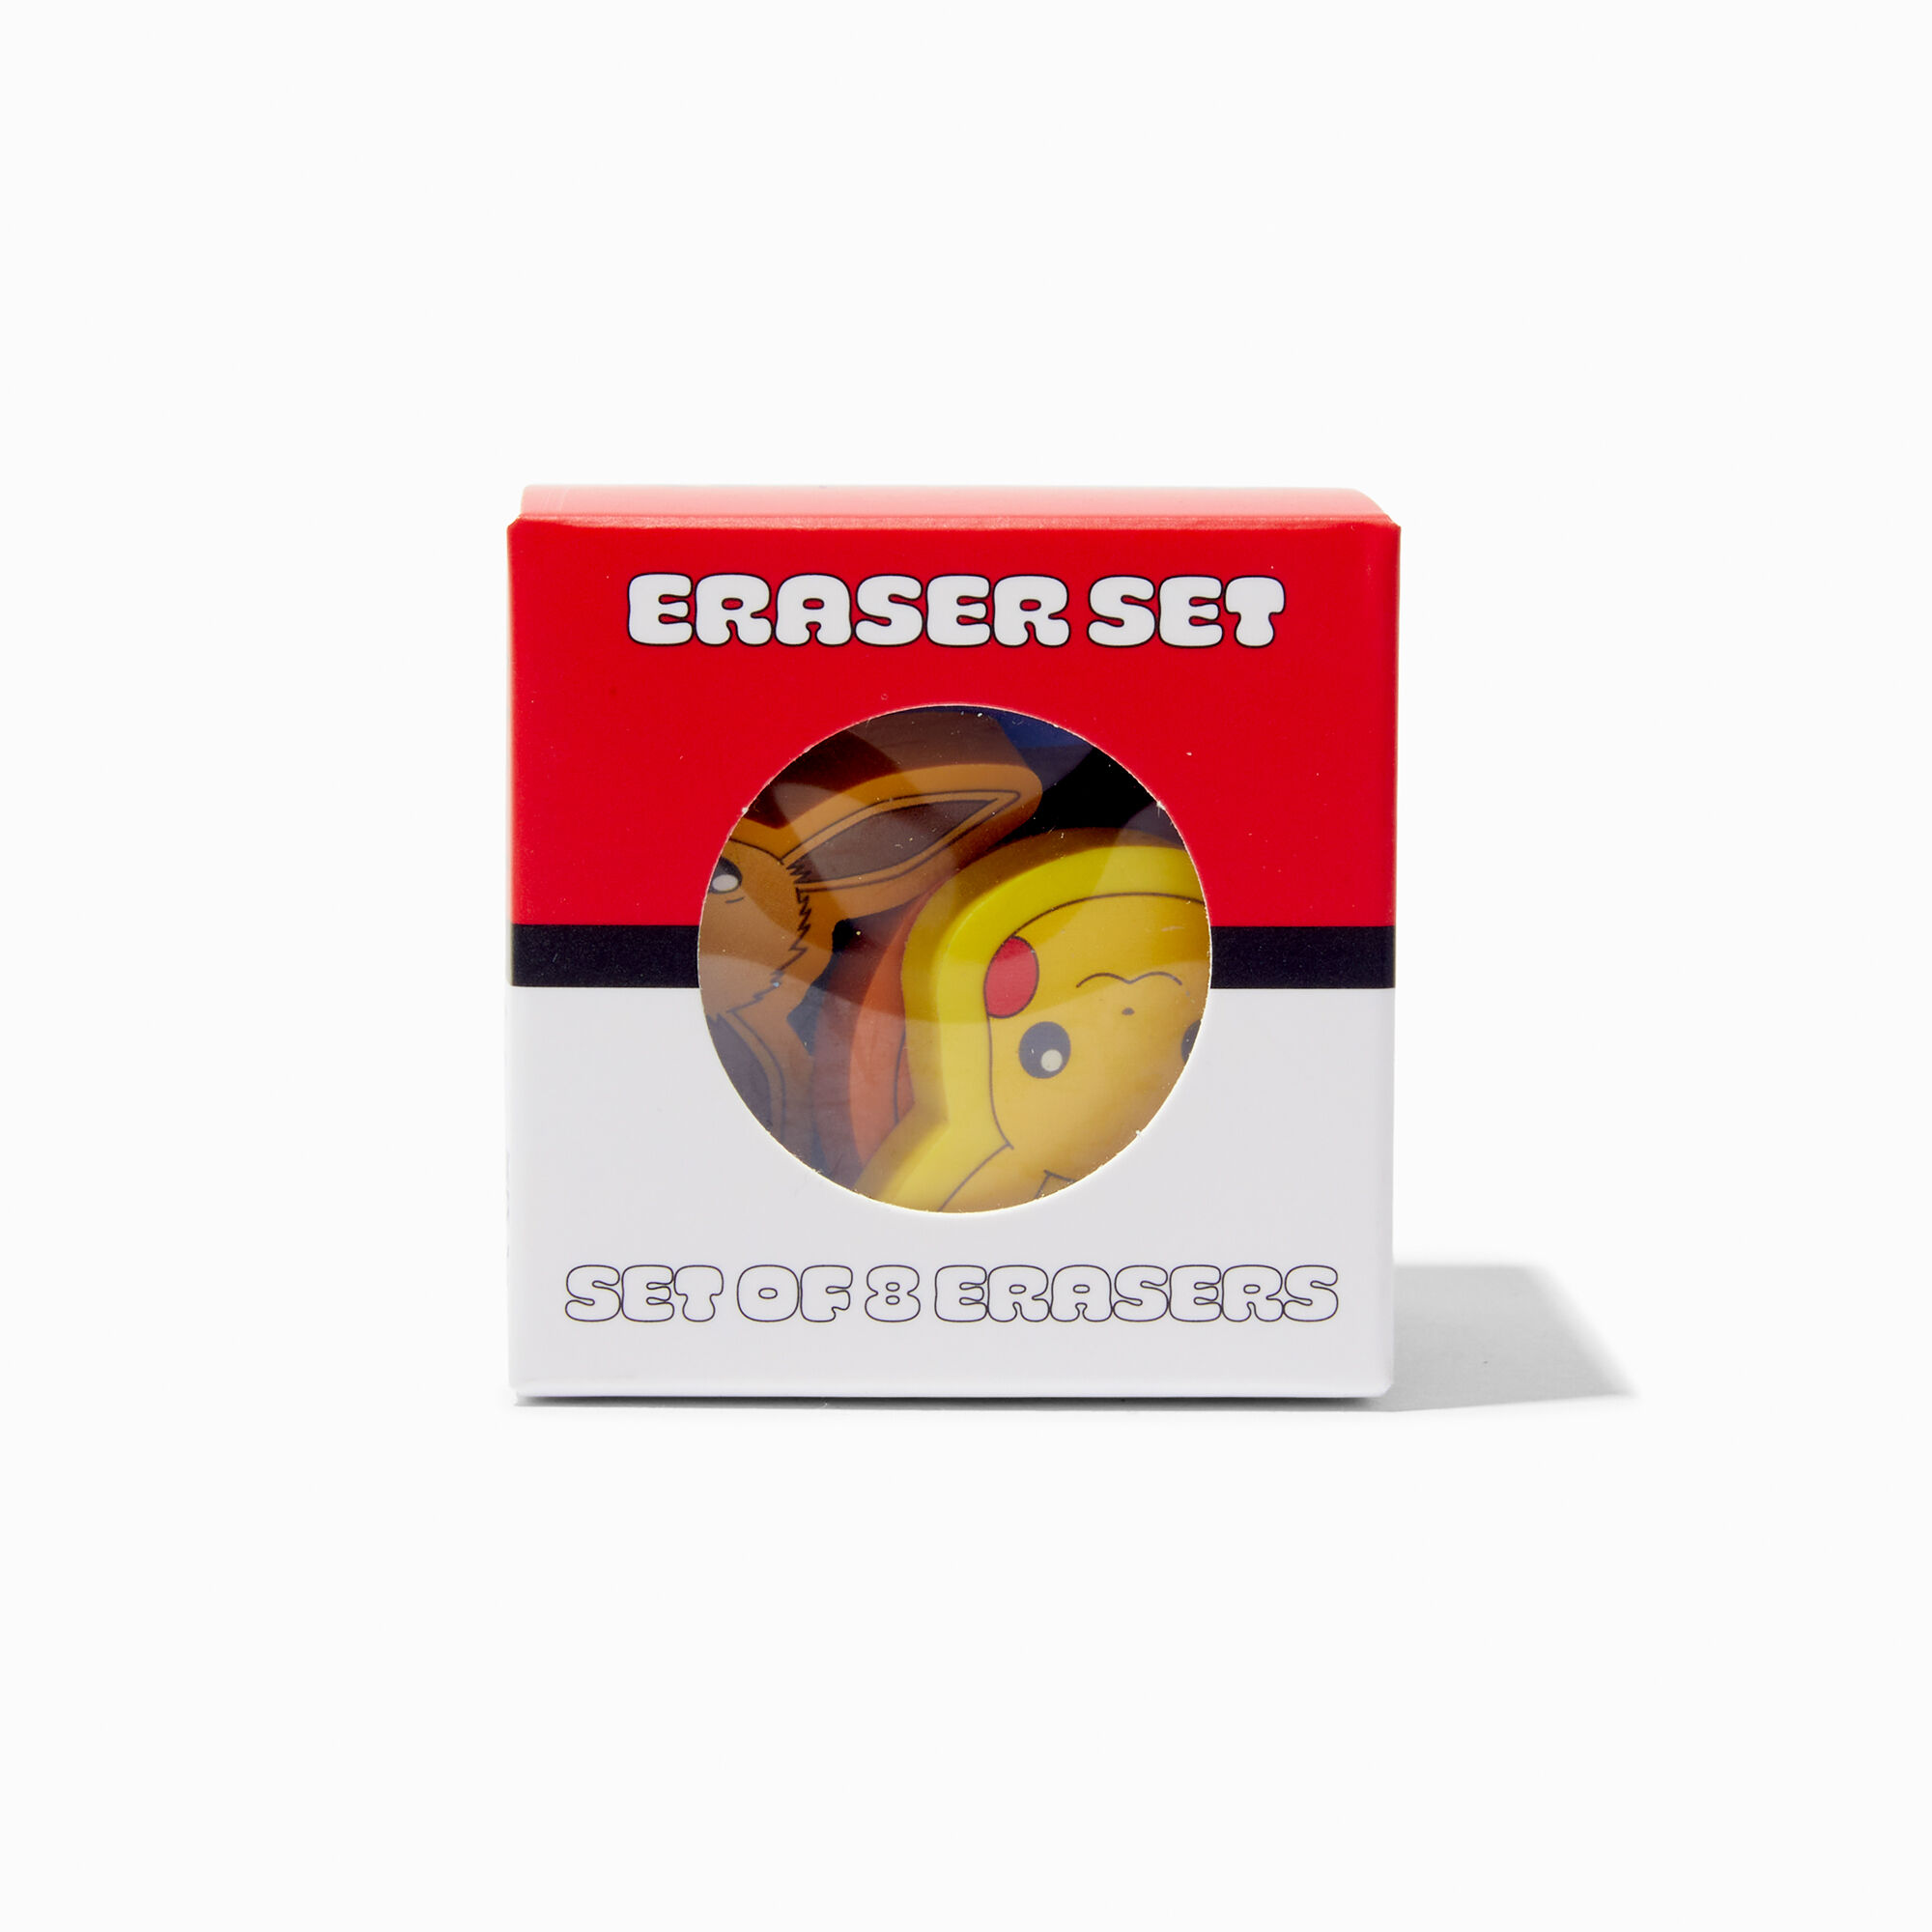 View Claires Pokémon Pikachu Eraser Set 8 Pack information